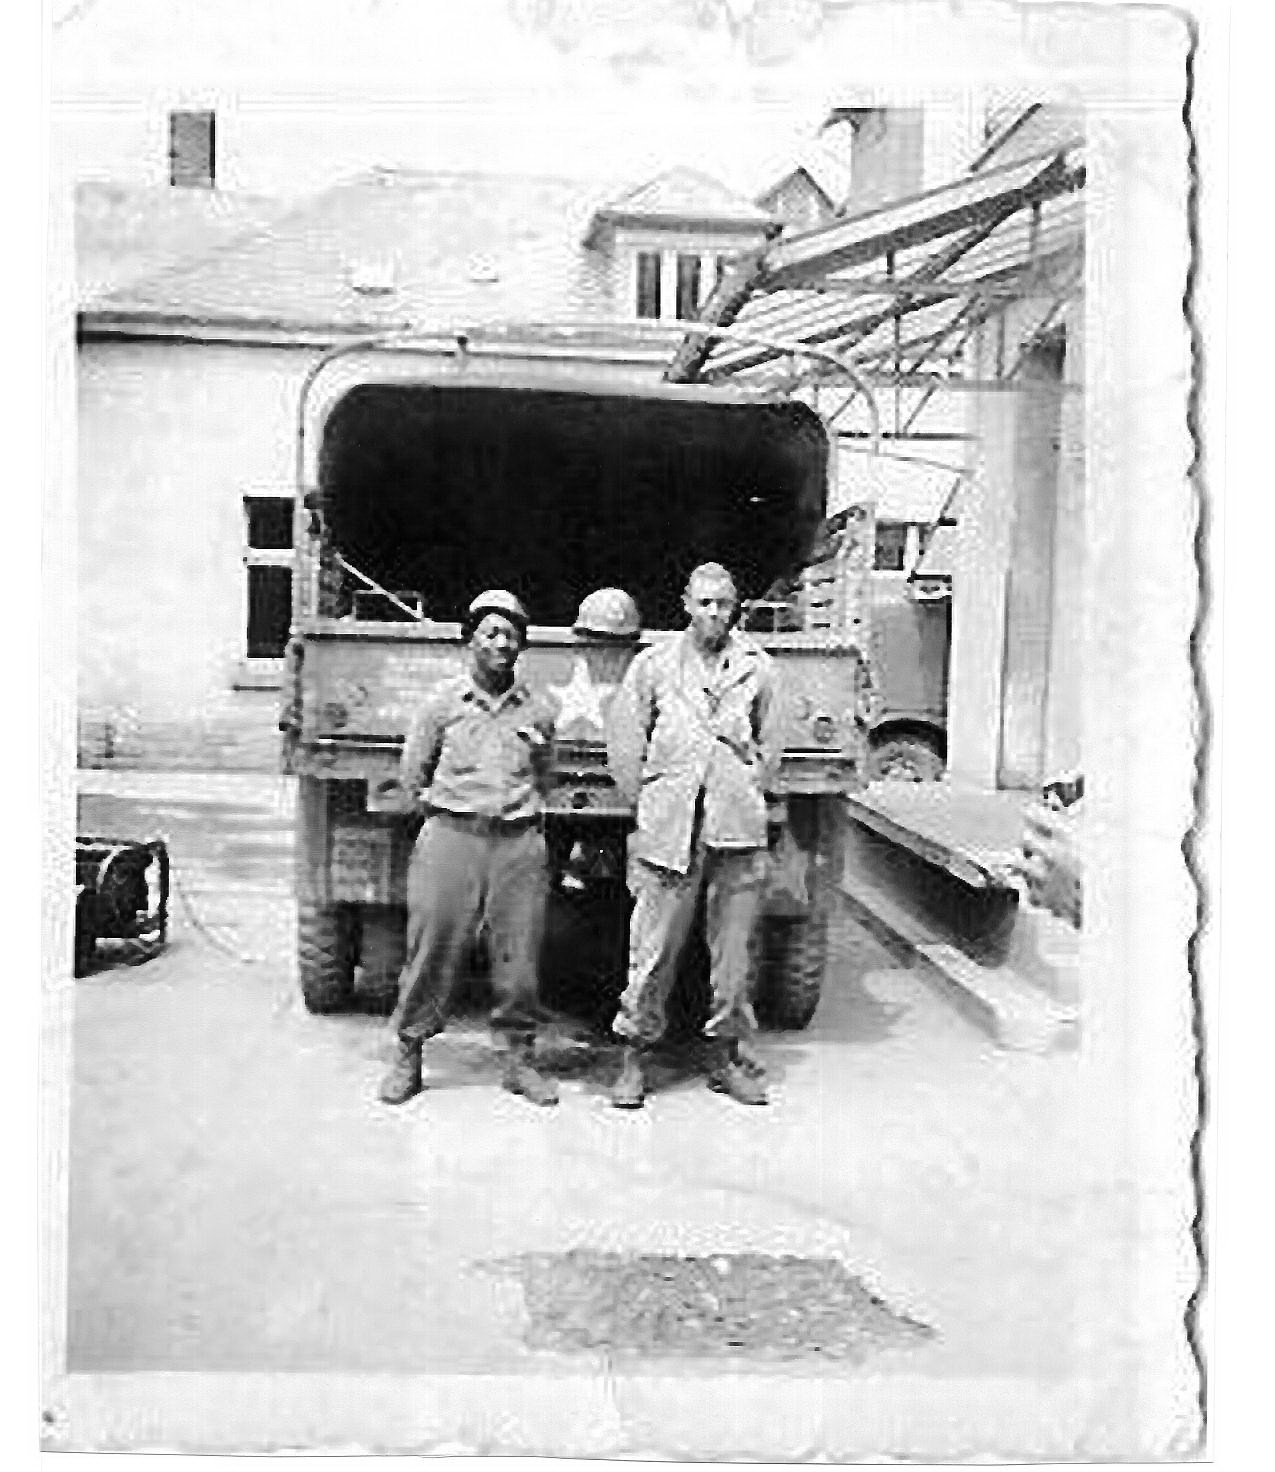 Frank Guy Jr. on the right. (World War II Veteran) (5th Generation)